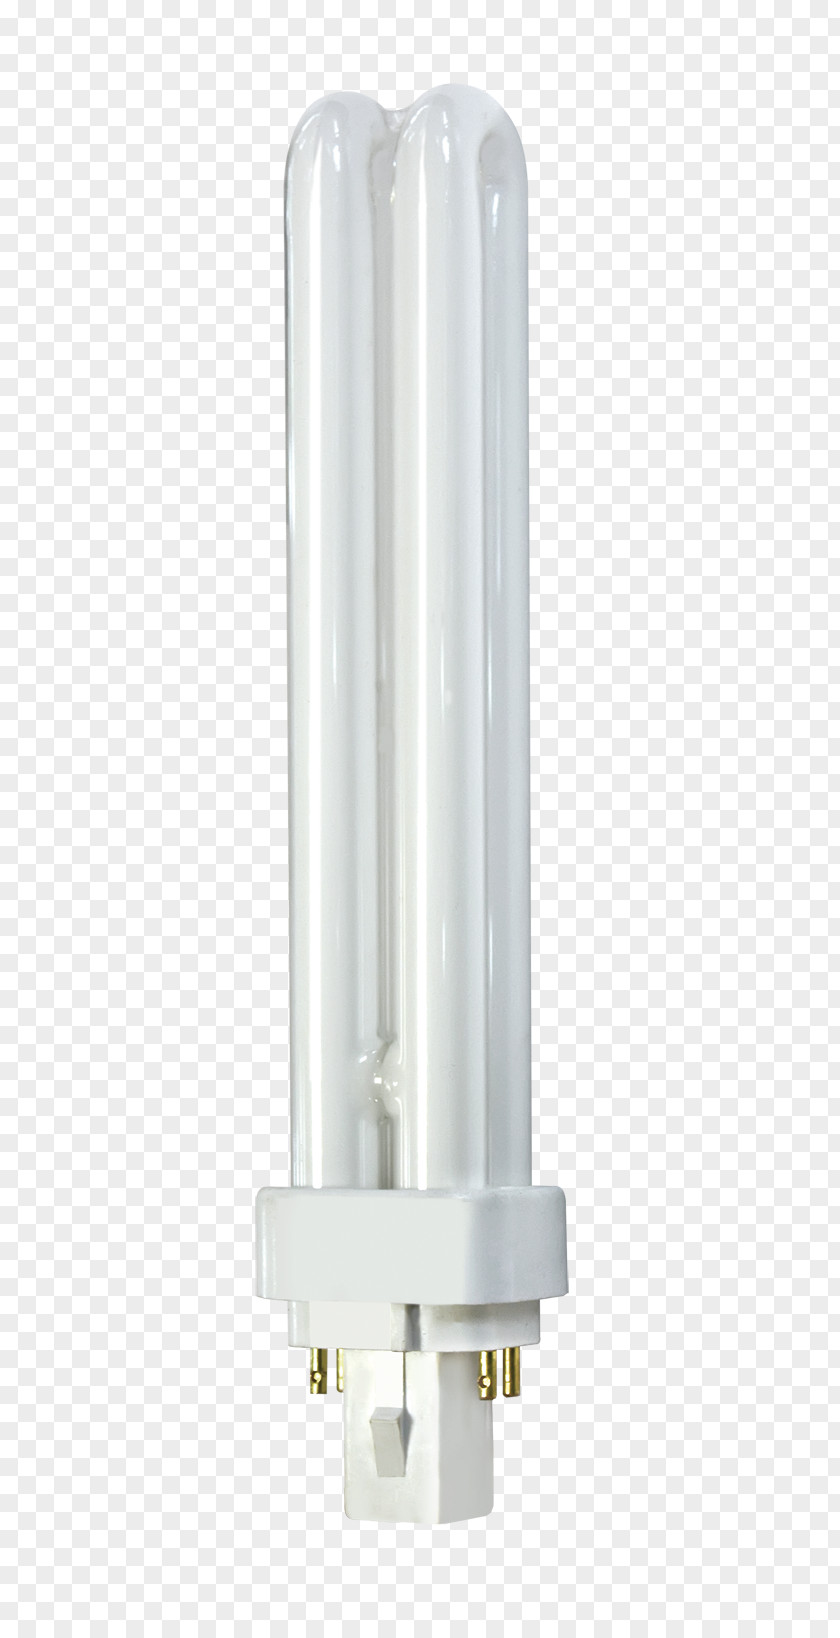 Girlanda Compact Fluorescent Lamp Lighting Edison Screw Electrical Ballast PNG